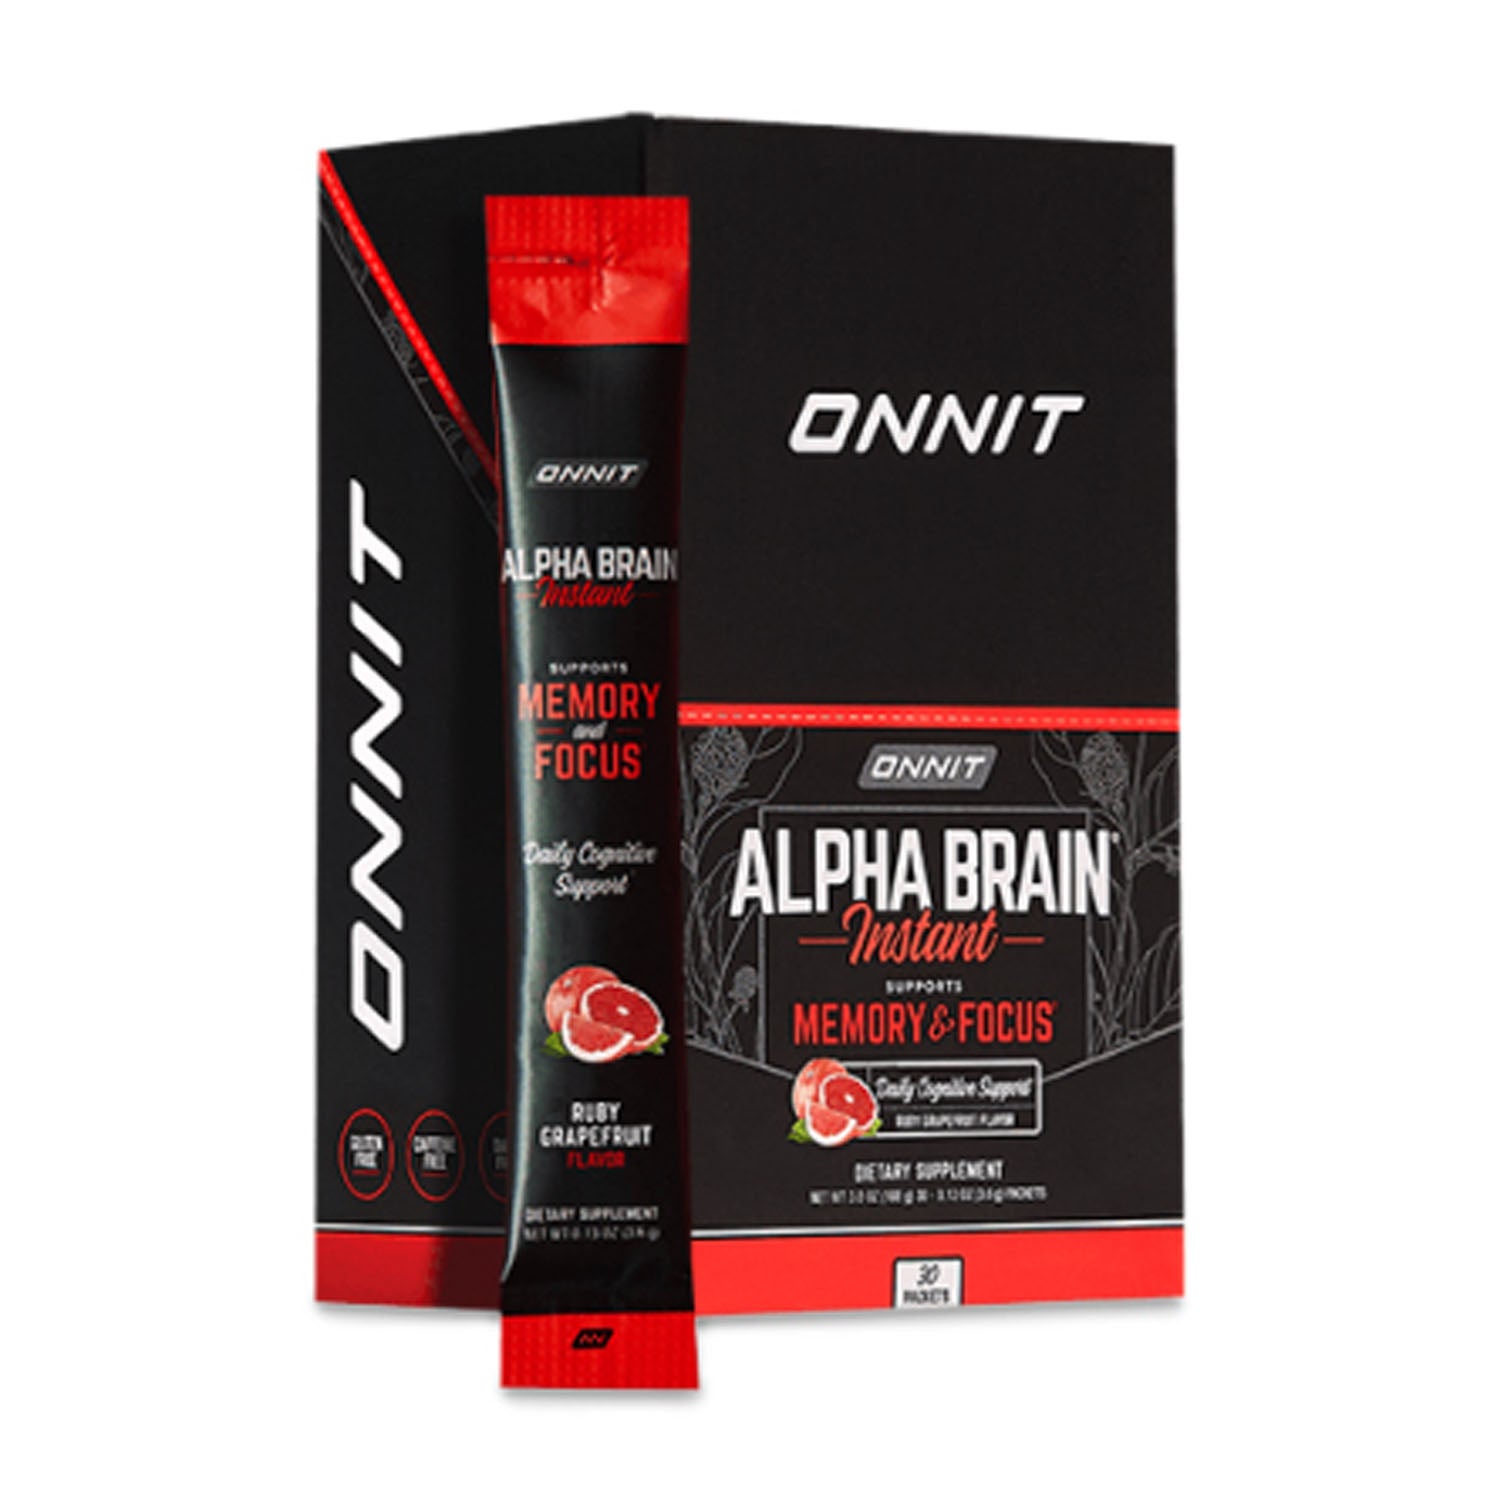 Alpha BRAIN Pre-Workout | Onnit